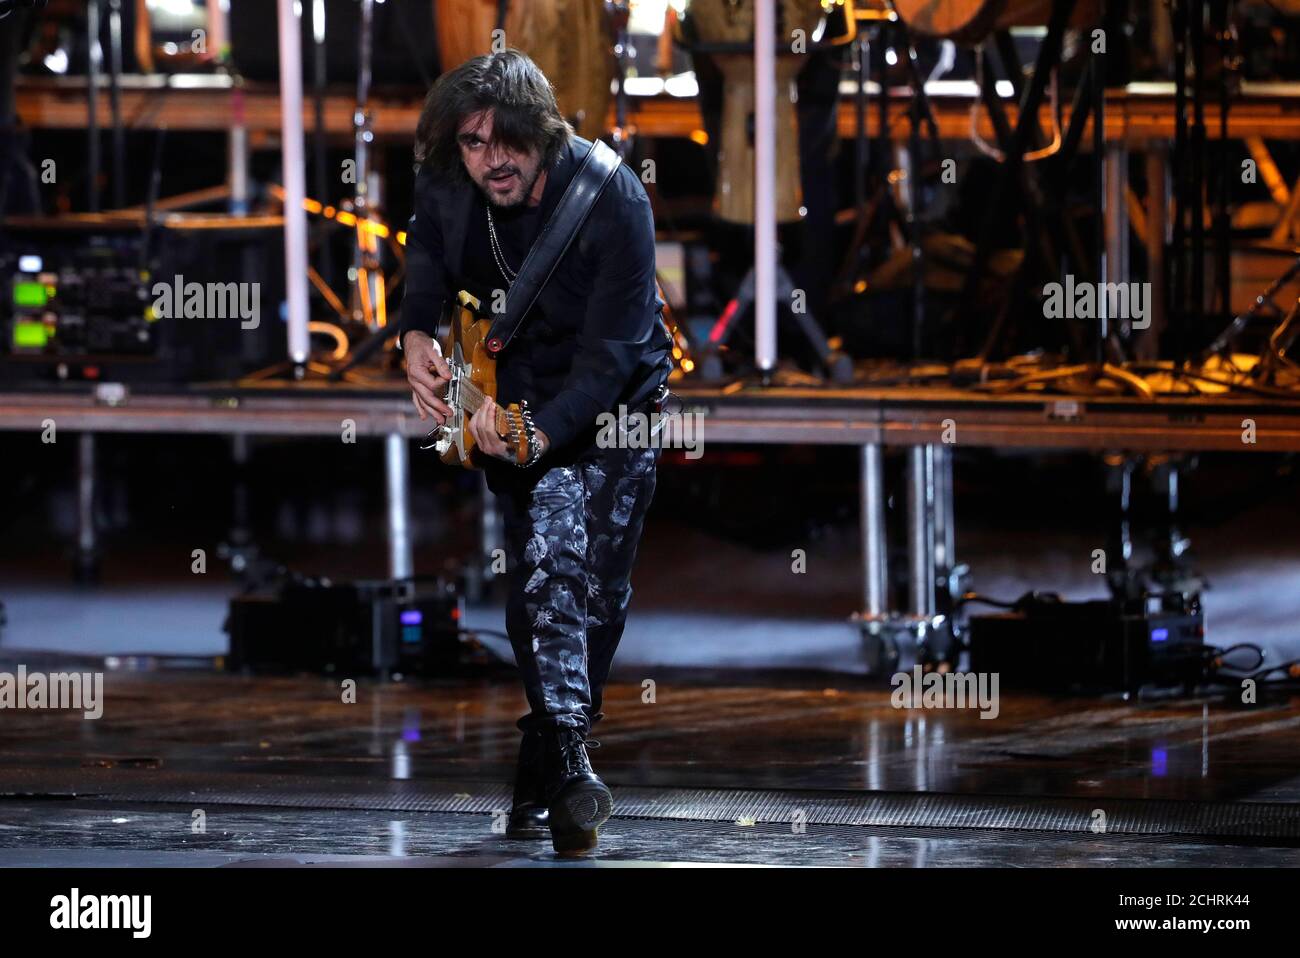 The 20th Annual Latin Grammy Awards - Show - Las Vegas, Nevada, U.S., November 14, 2019 - Juanes performs. REUTERS/Steve Marcus Stock Photo